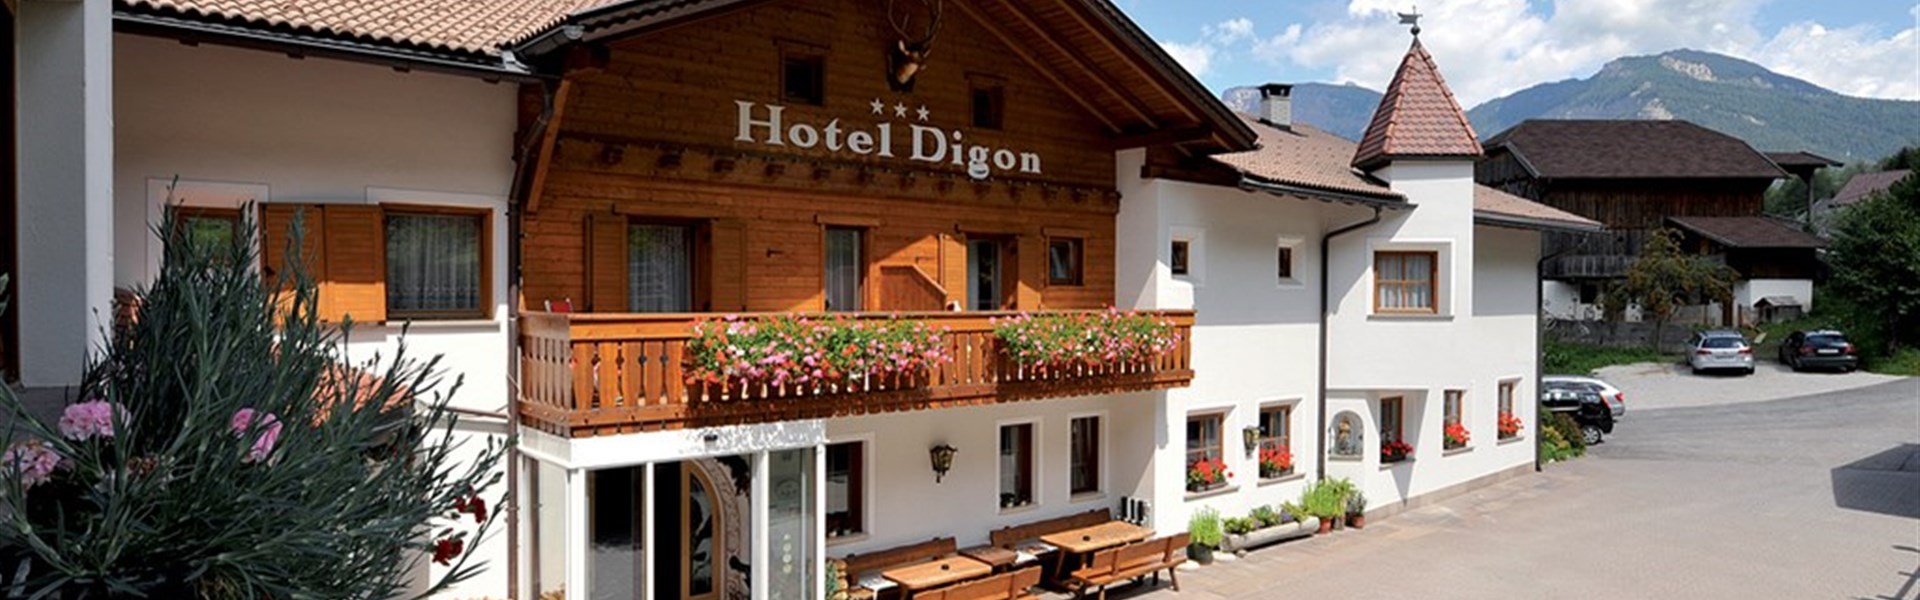 Hotel Digon - 